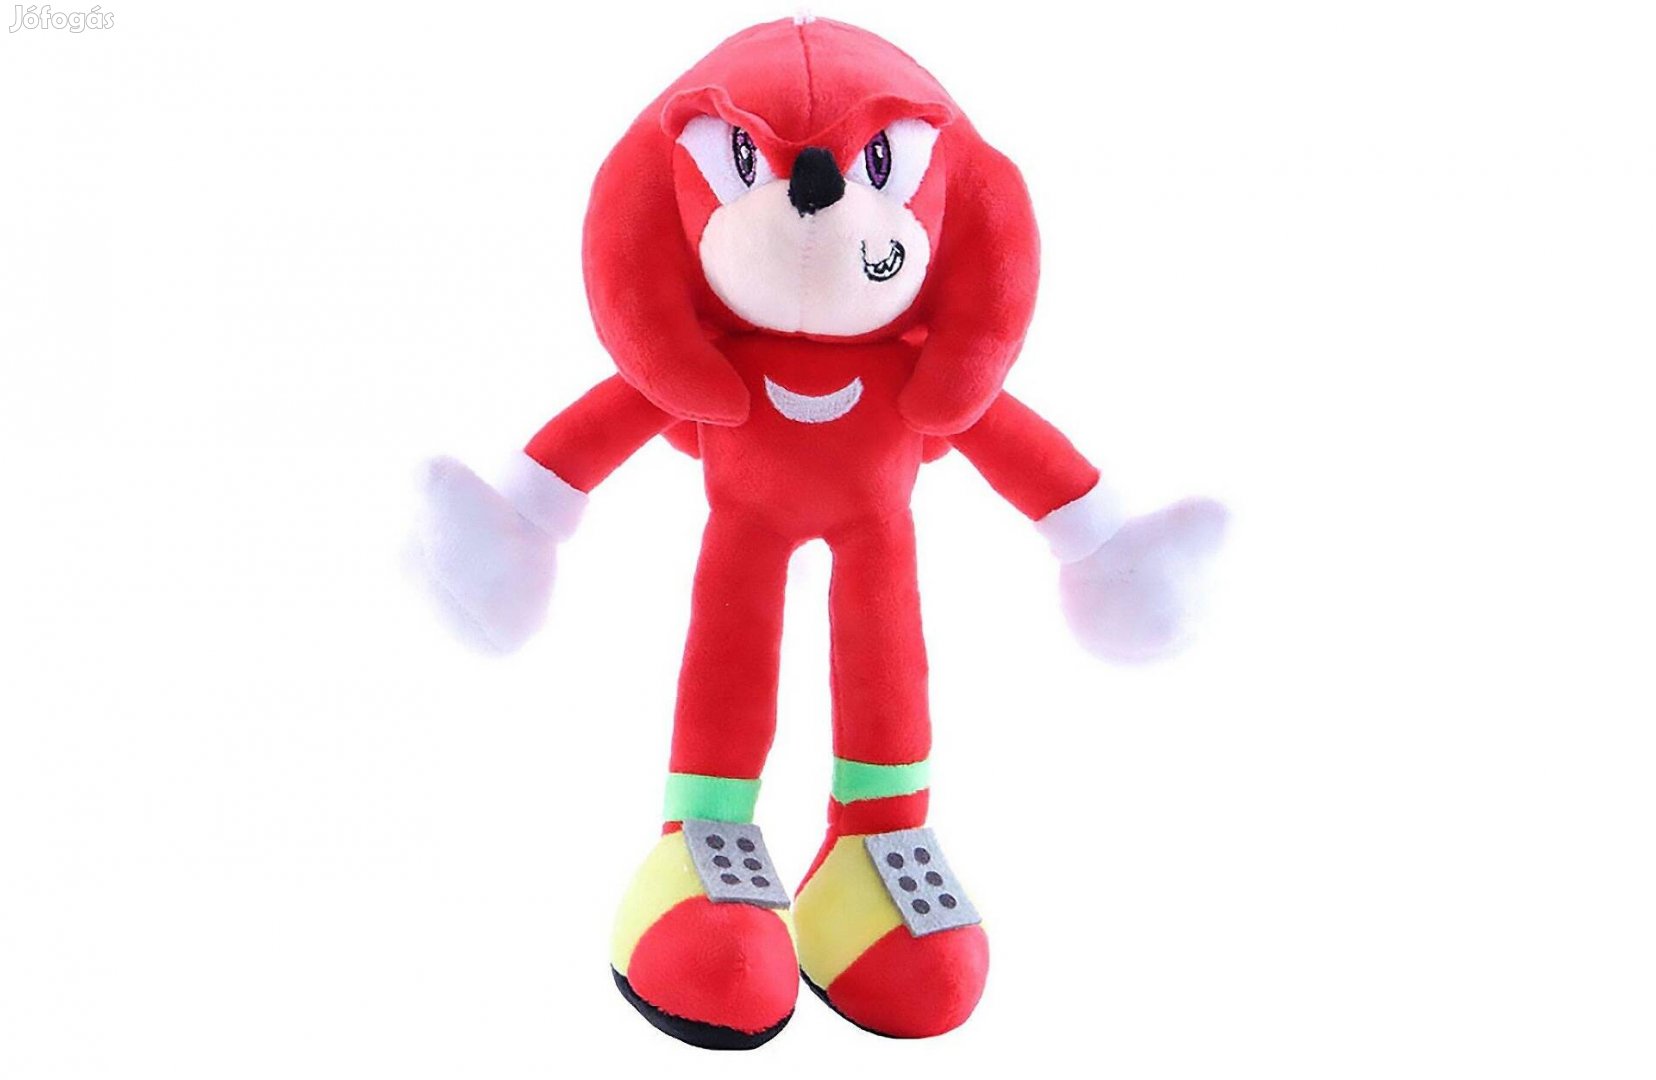 Sonic a sündisznó - Piros Knuckles plüss 20 cm